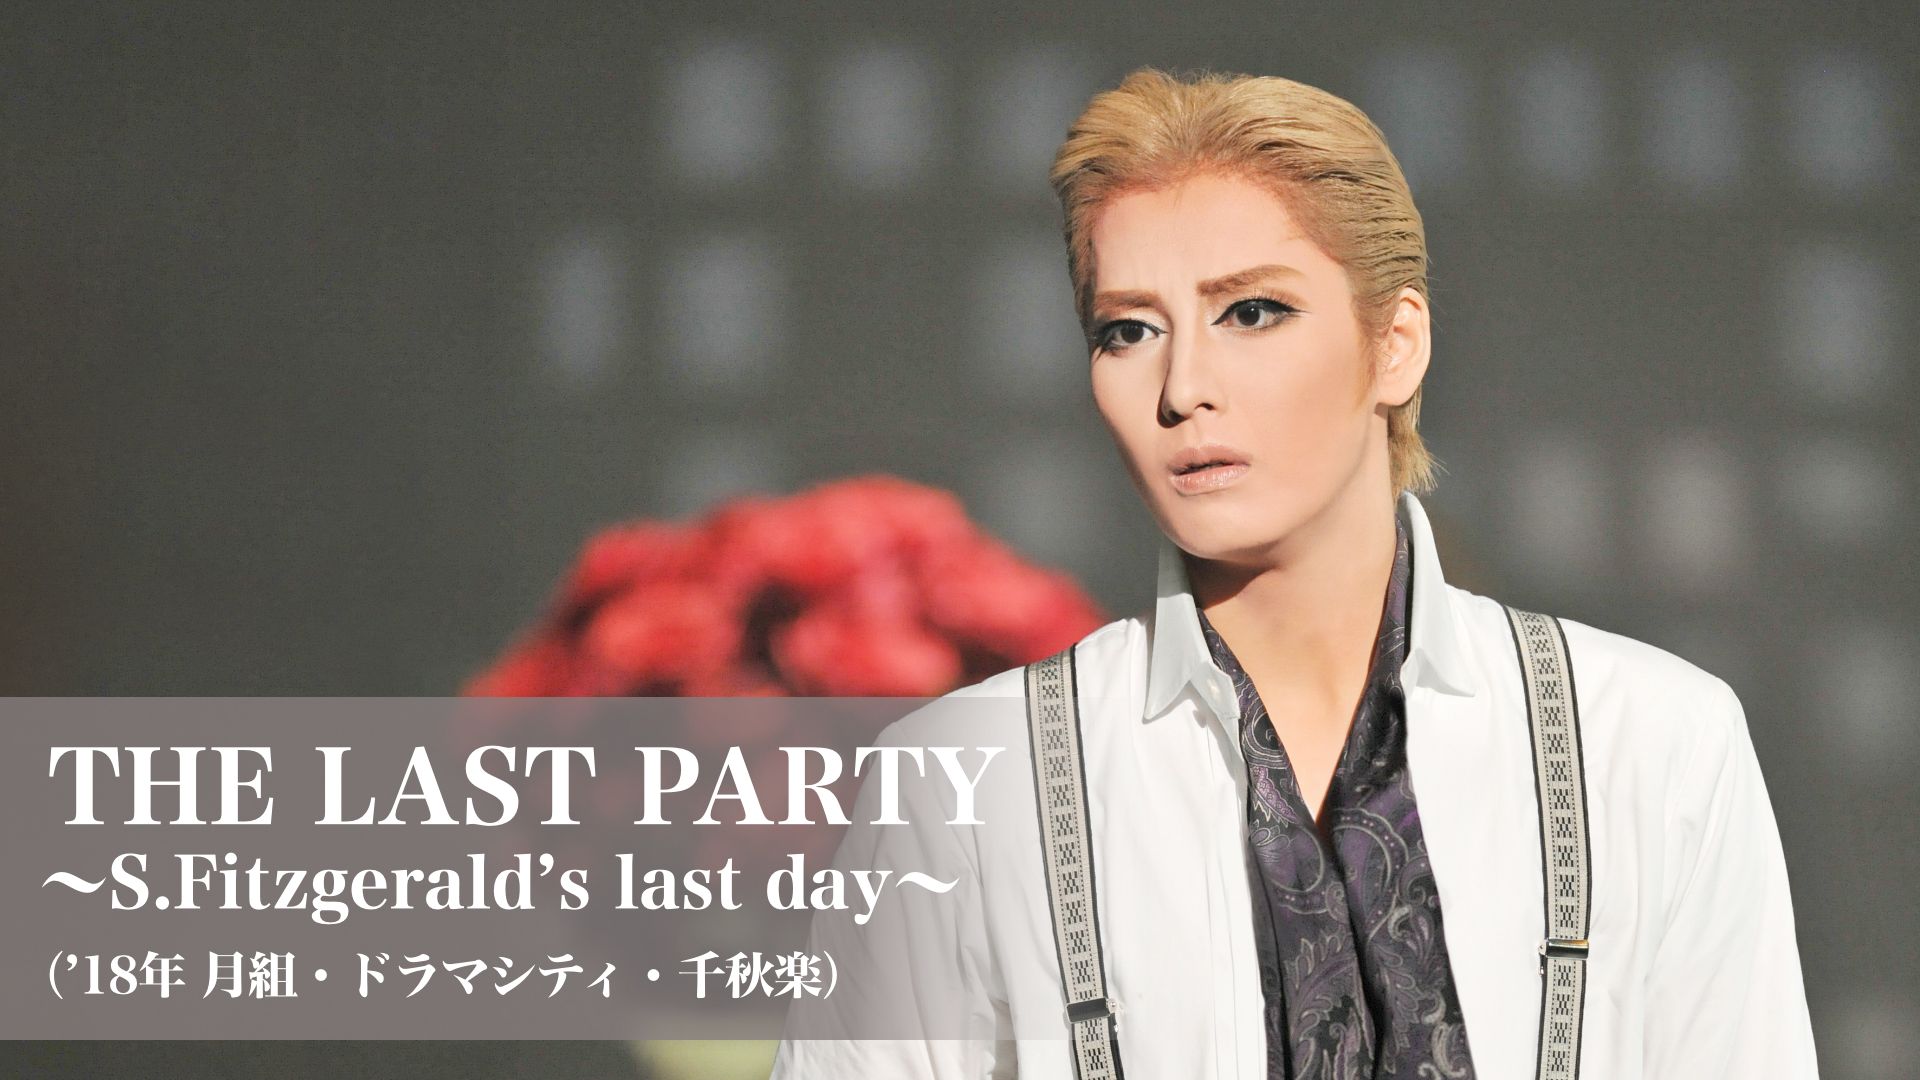 THE LAST PARTY 〜S.Fitzgerald's last day〜('18年月組・ドラマシティ・千秋楽)